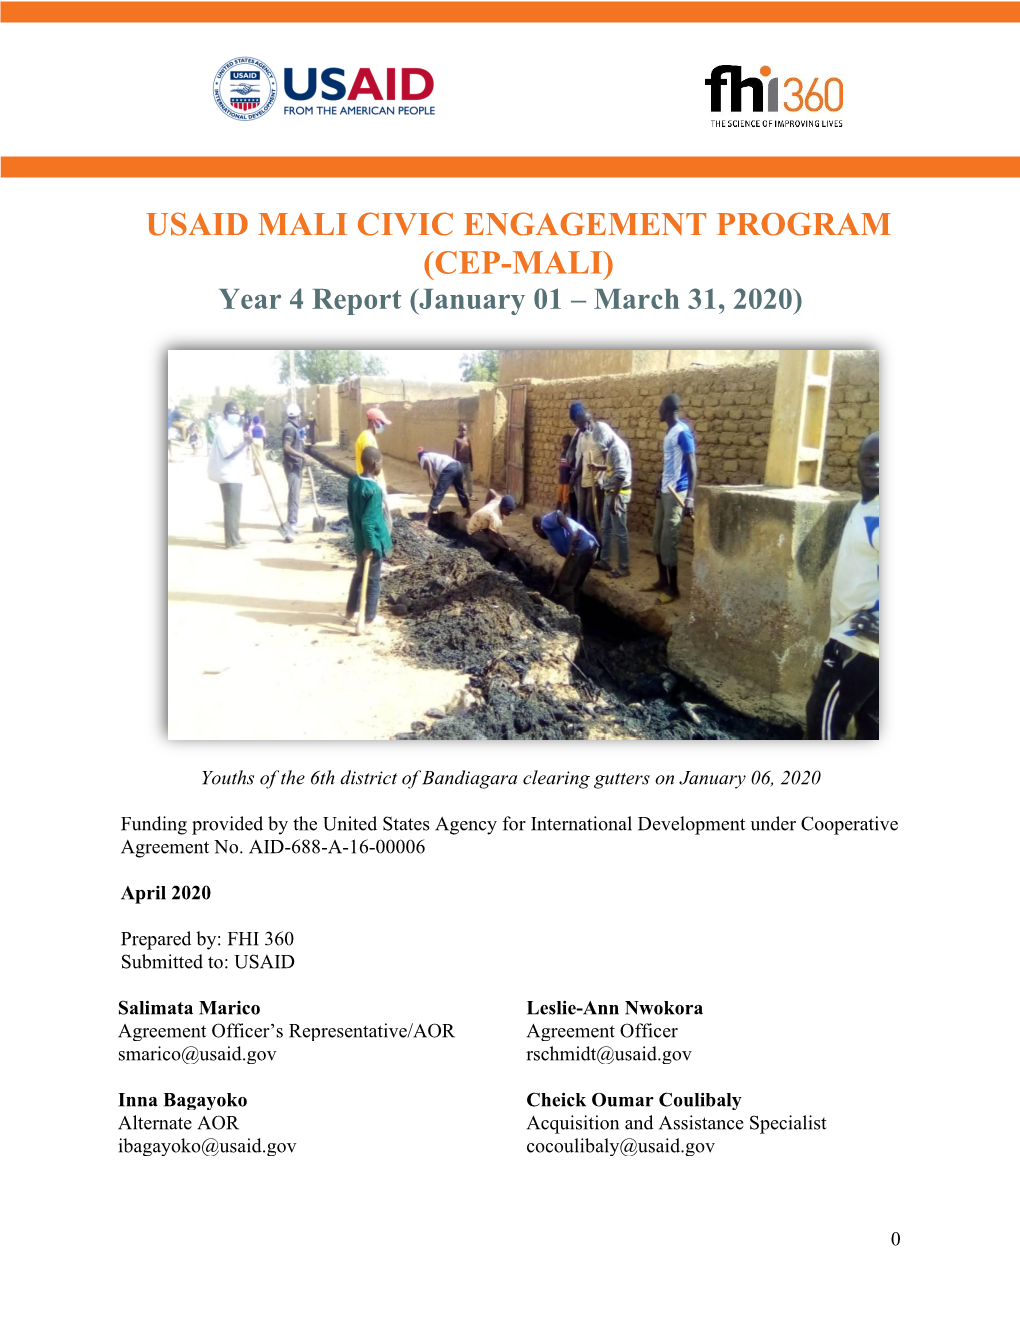 USAID MALI CIVIC ENGAGEMENT PROGRAM (CEP-MALI) Year 4 Report (January 01 – March 31, 2020)